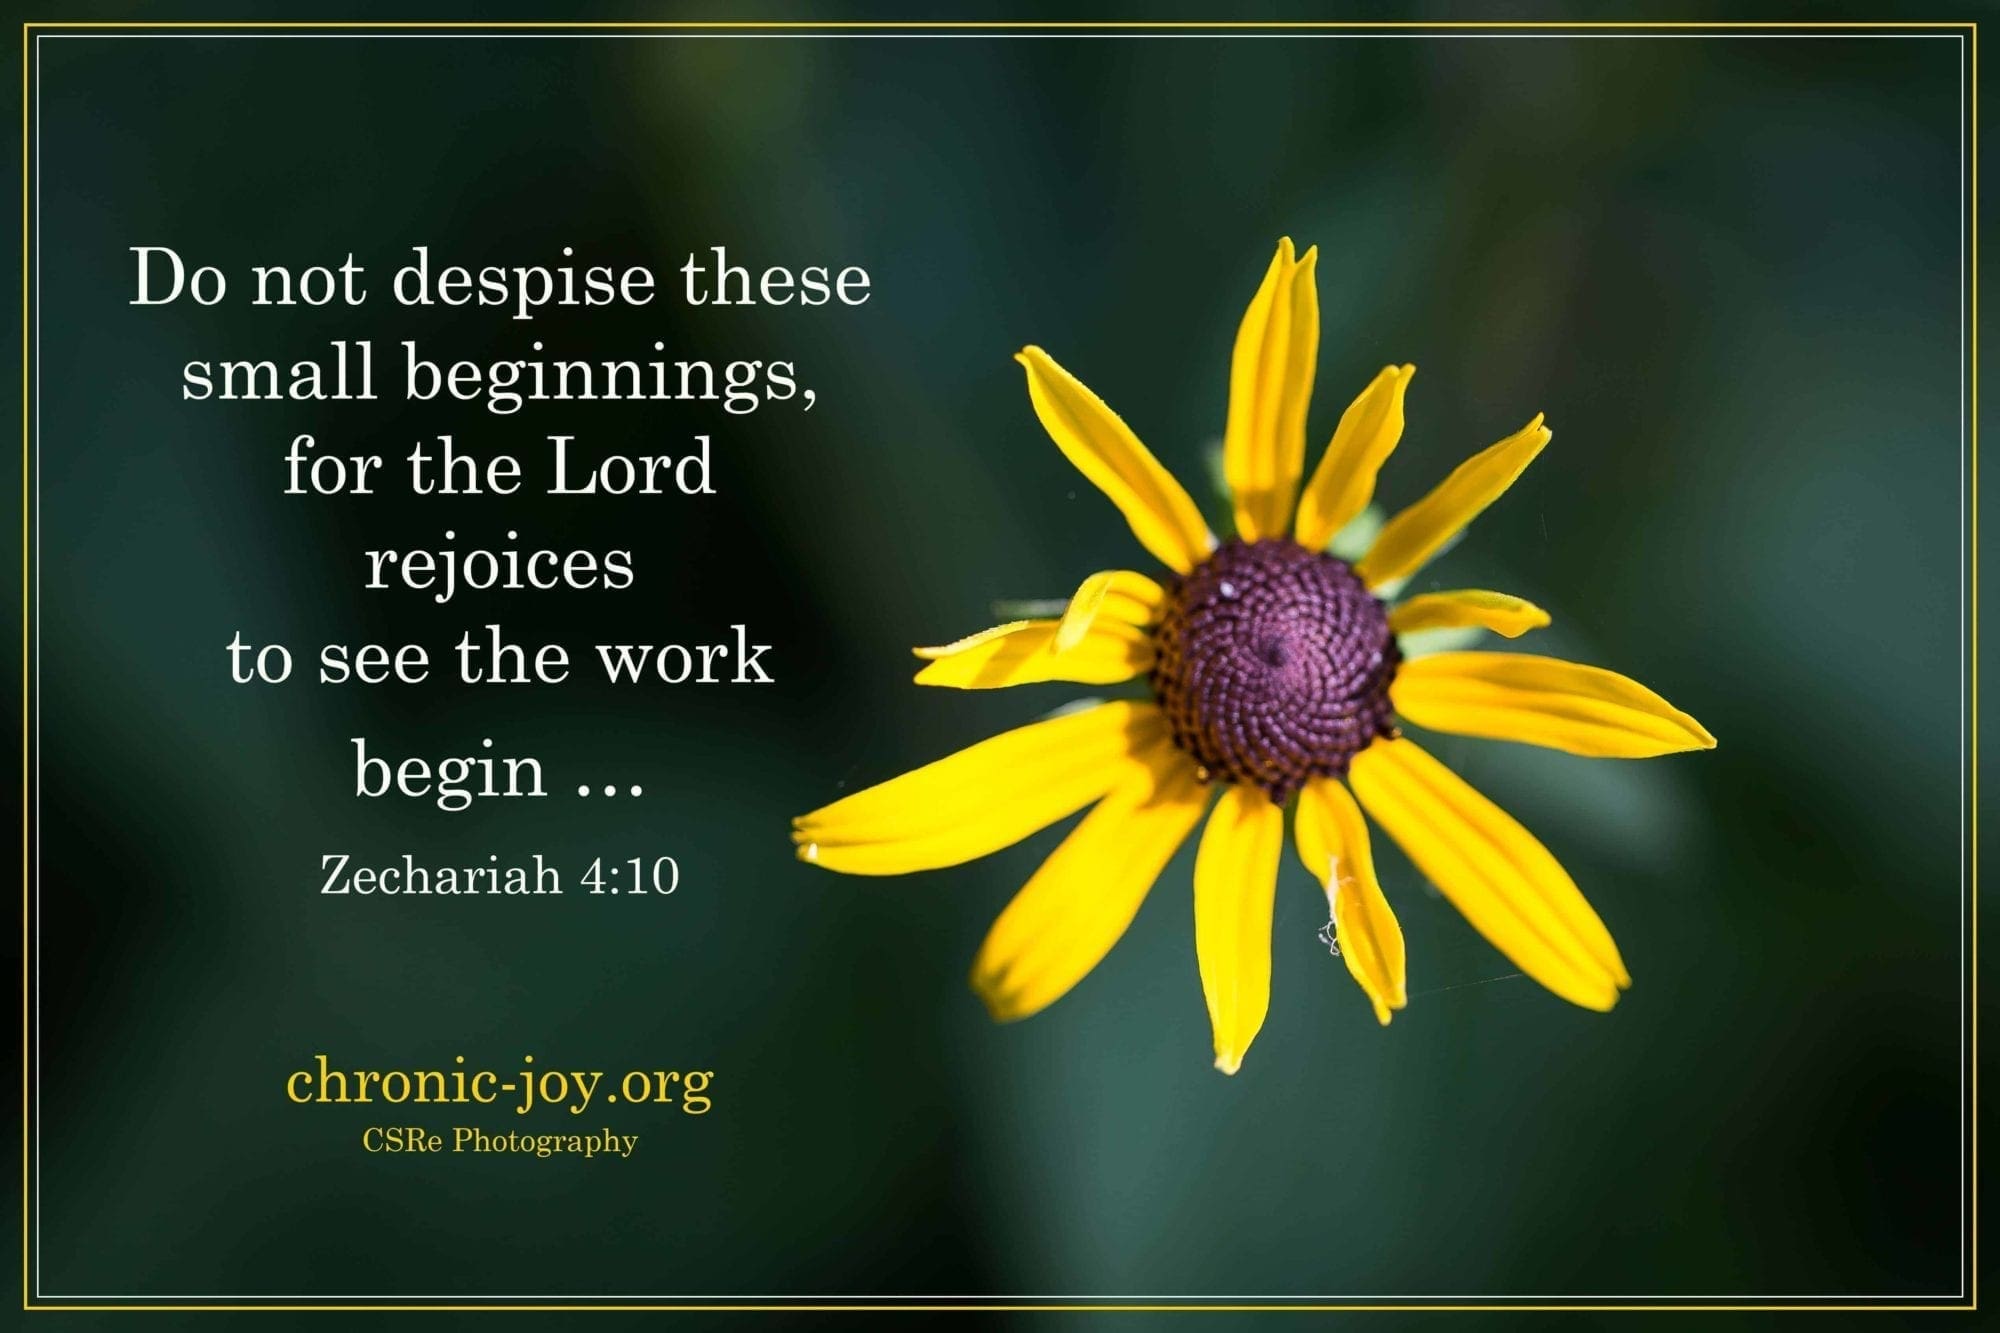 Do not despise small beginnings...